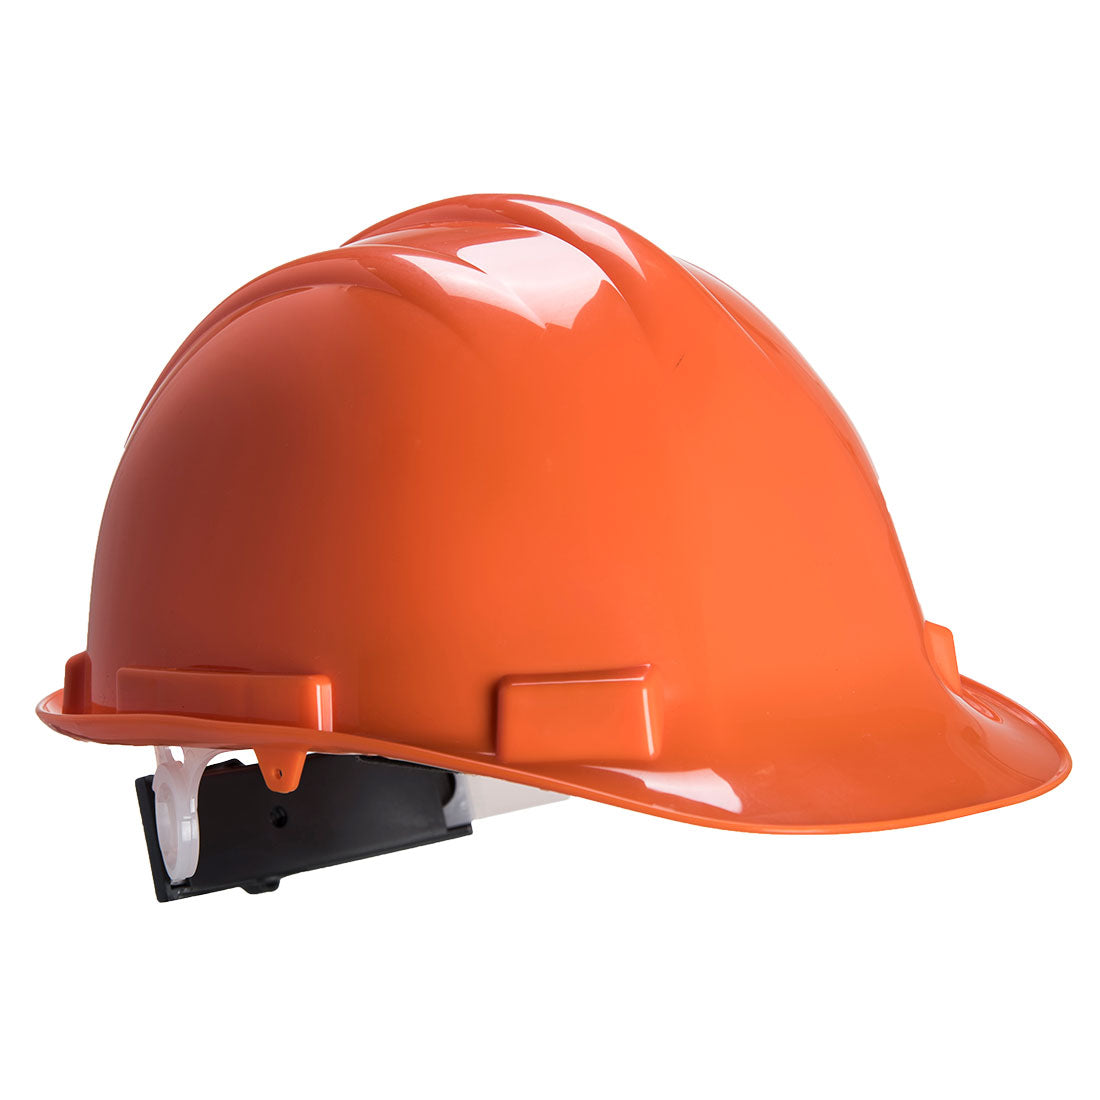 PW50 - Expertbase Safety Helmet